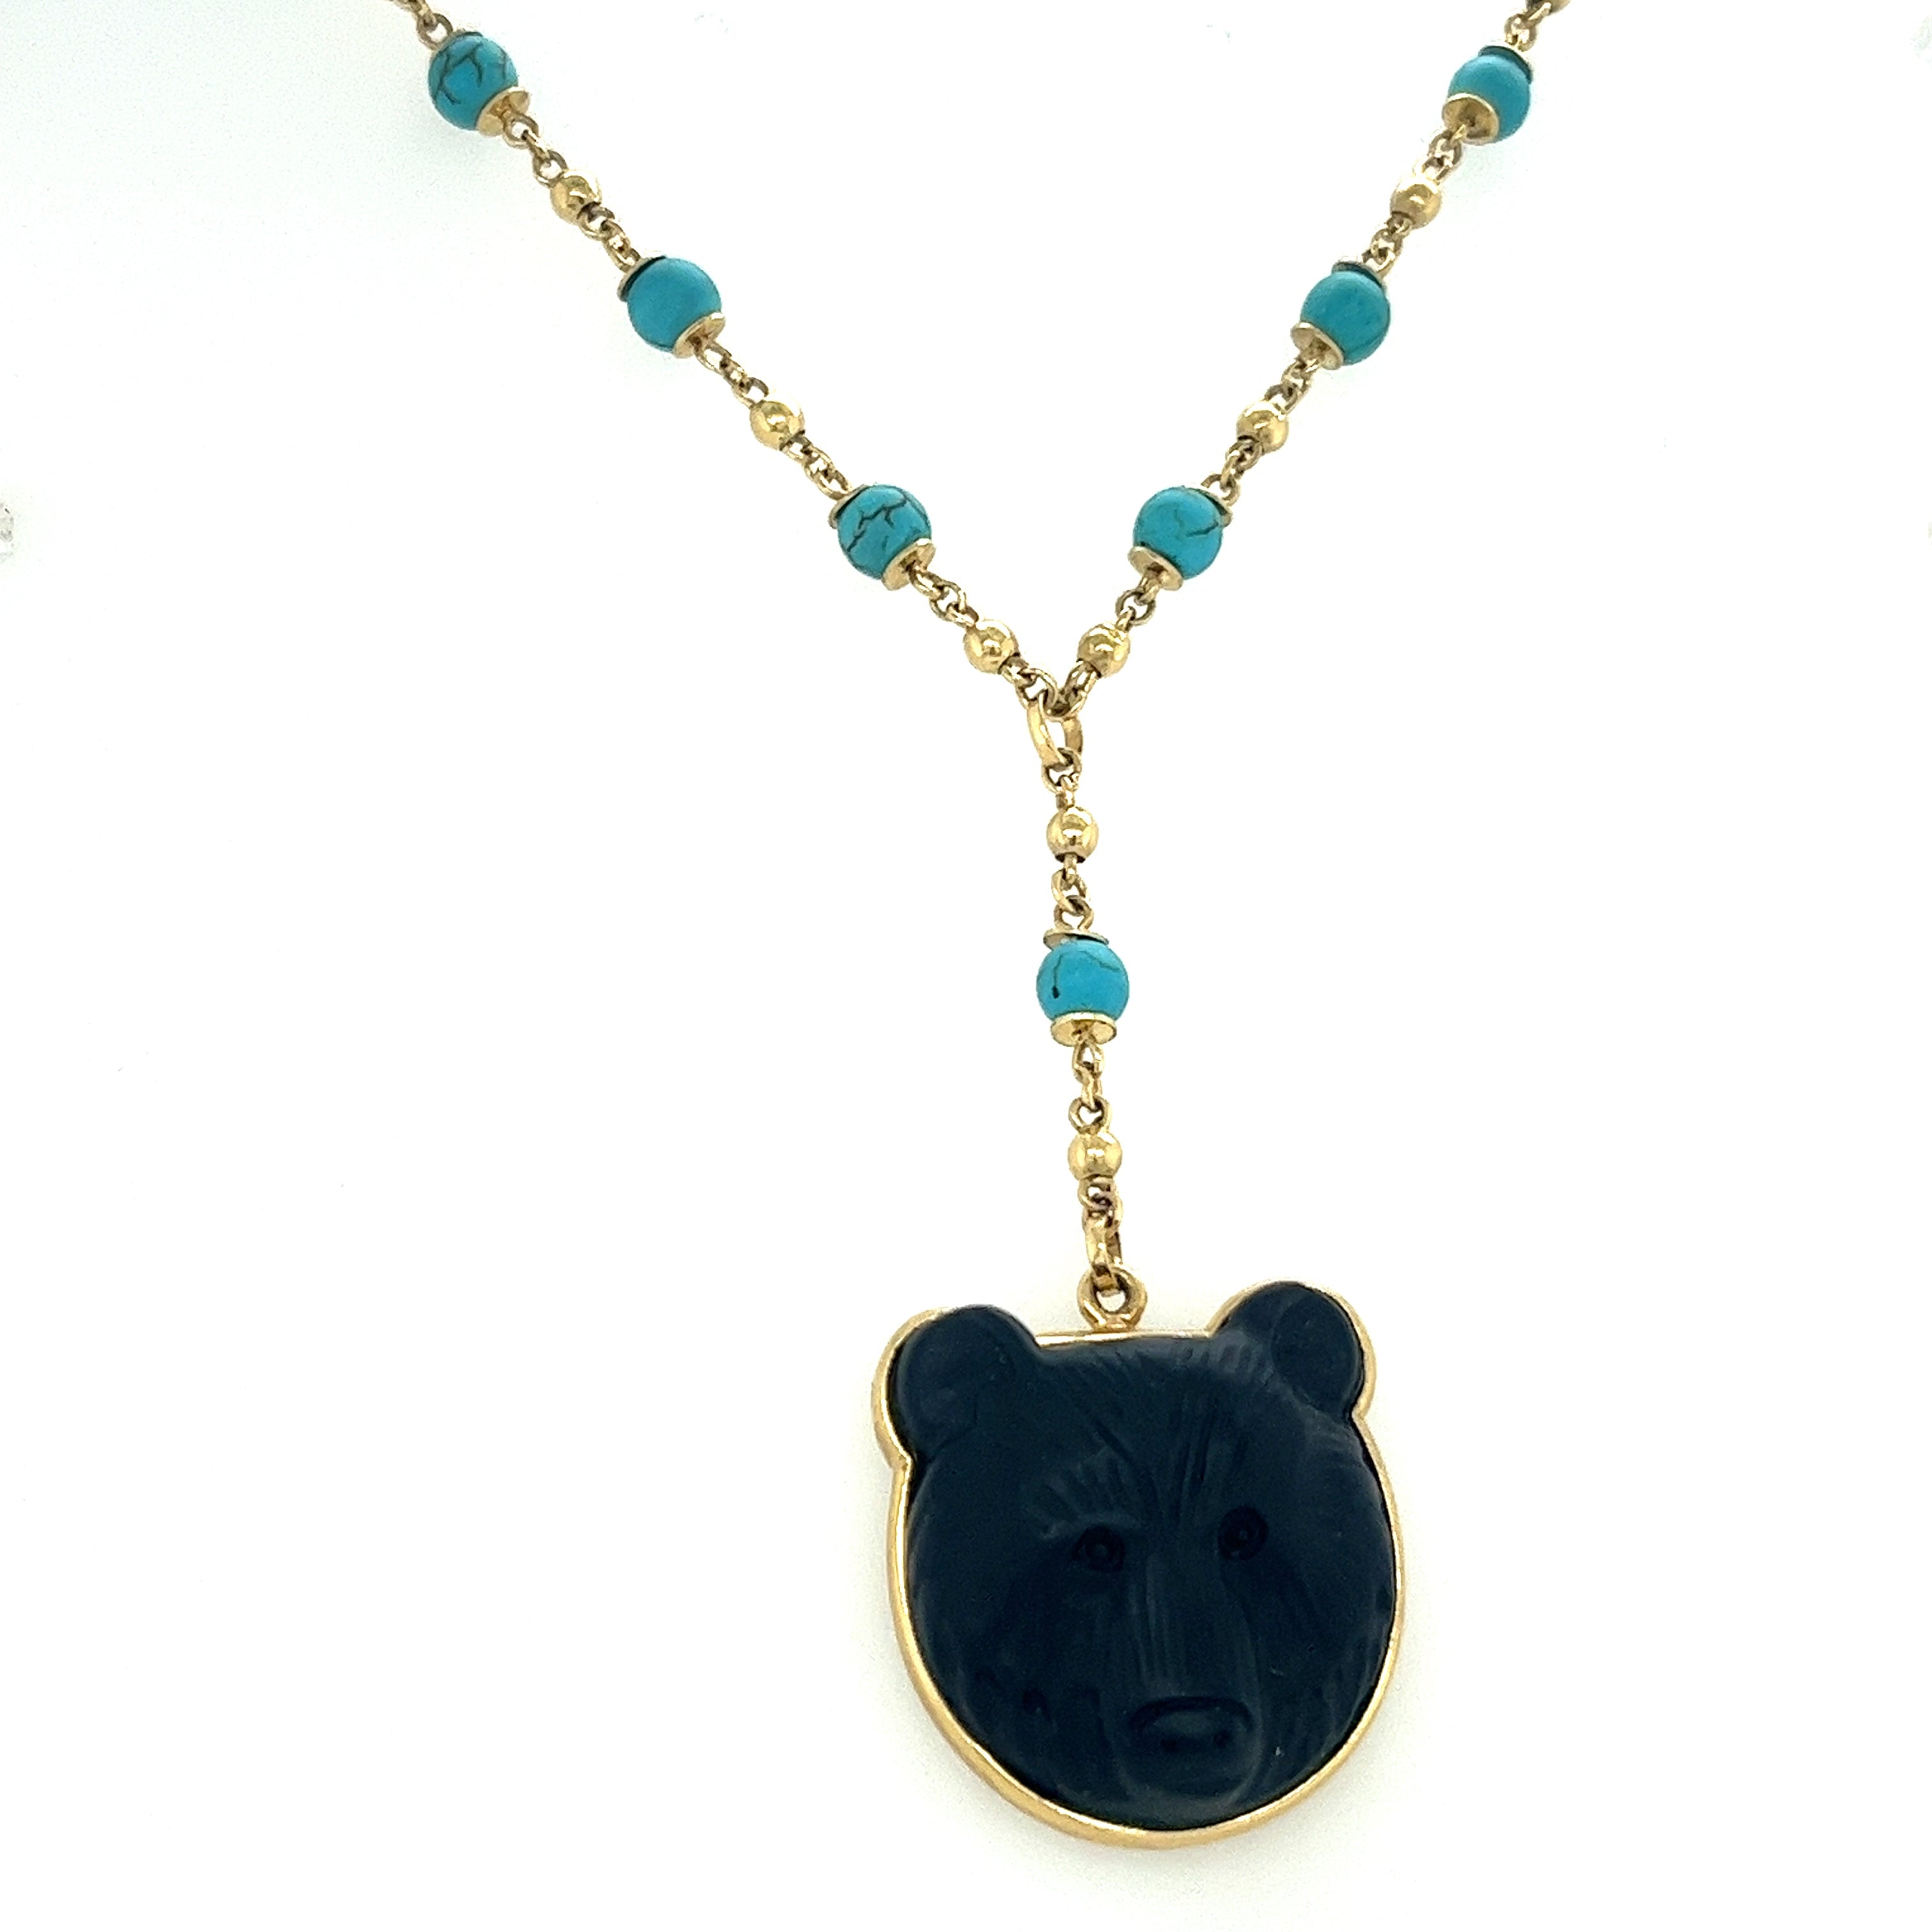 Dangling Long Bear Shap Necklace with Feroza Stones in 18K Yellow Gold - S-XG014P